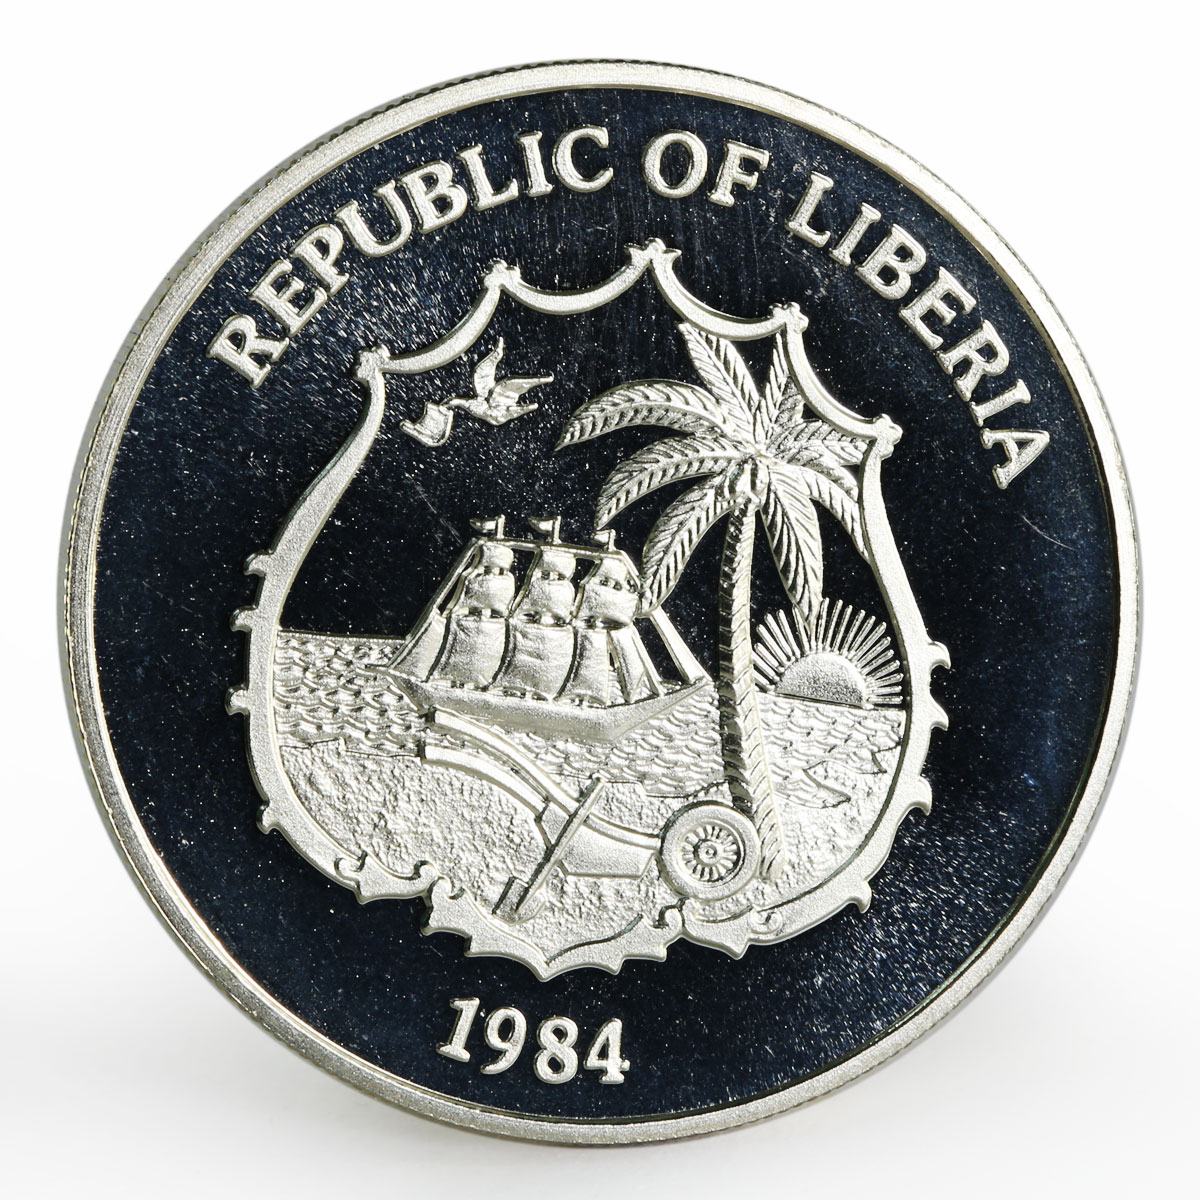 Liberia 10 dollars International Games Basketball proof nickel coin 1984